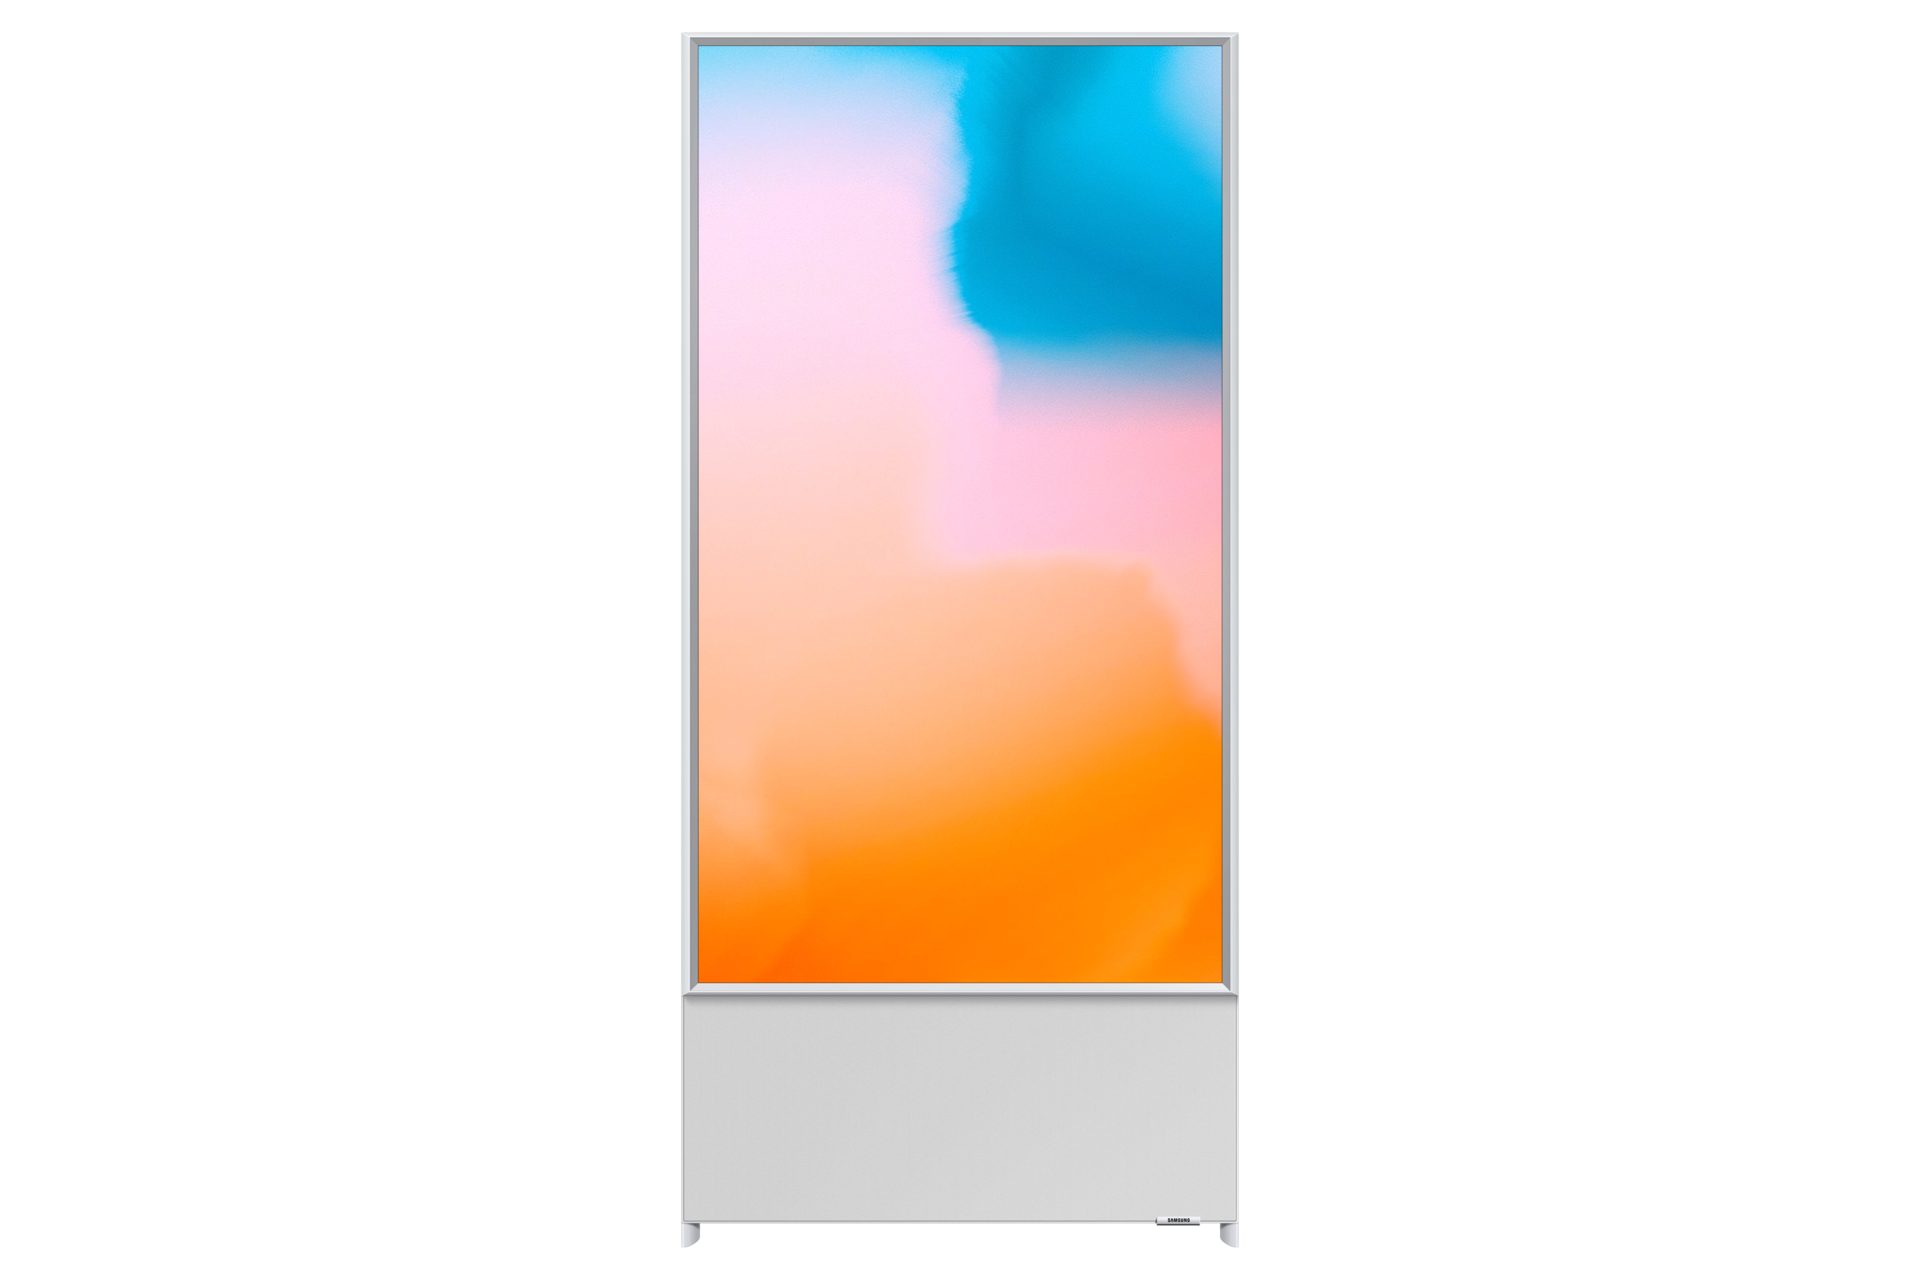 Samsung The Sero 43 inch TV - White